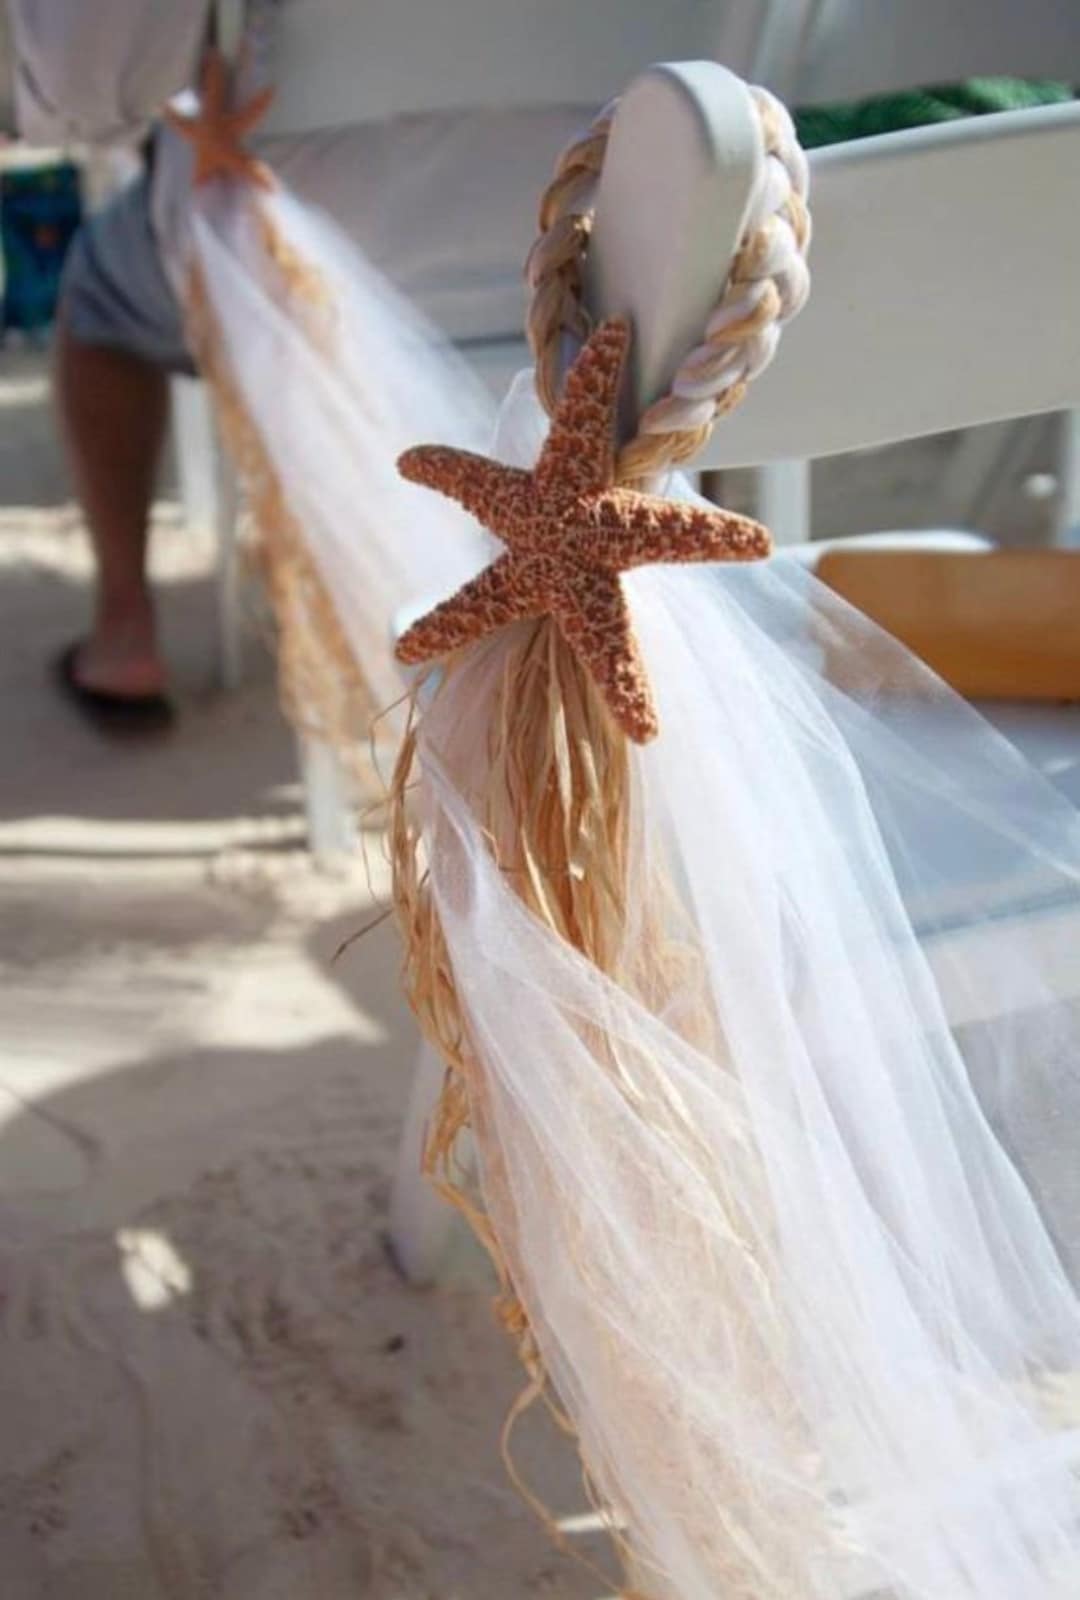 Burlap Bows Pew Aisle Chair Beach Wedding Decor Starfish Wedding